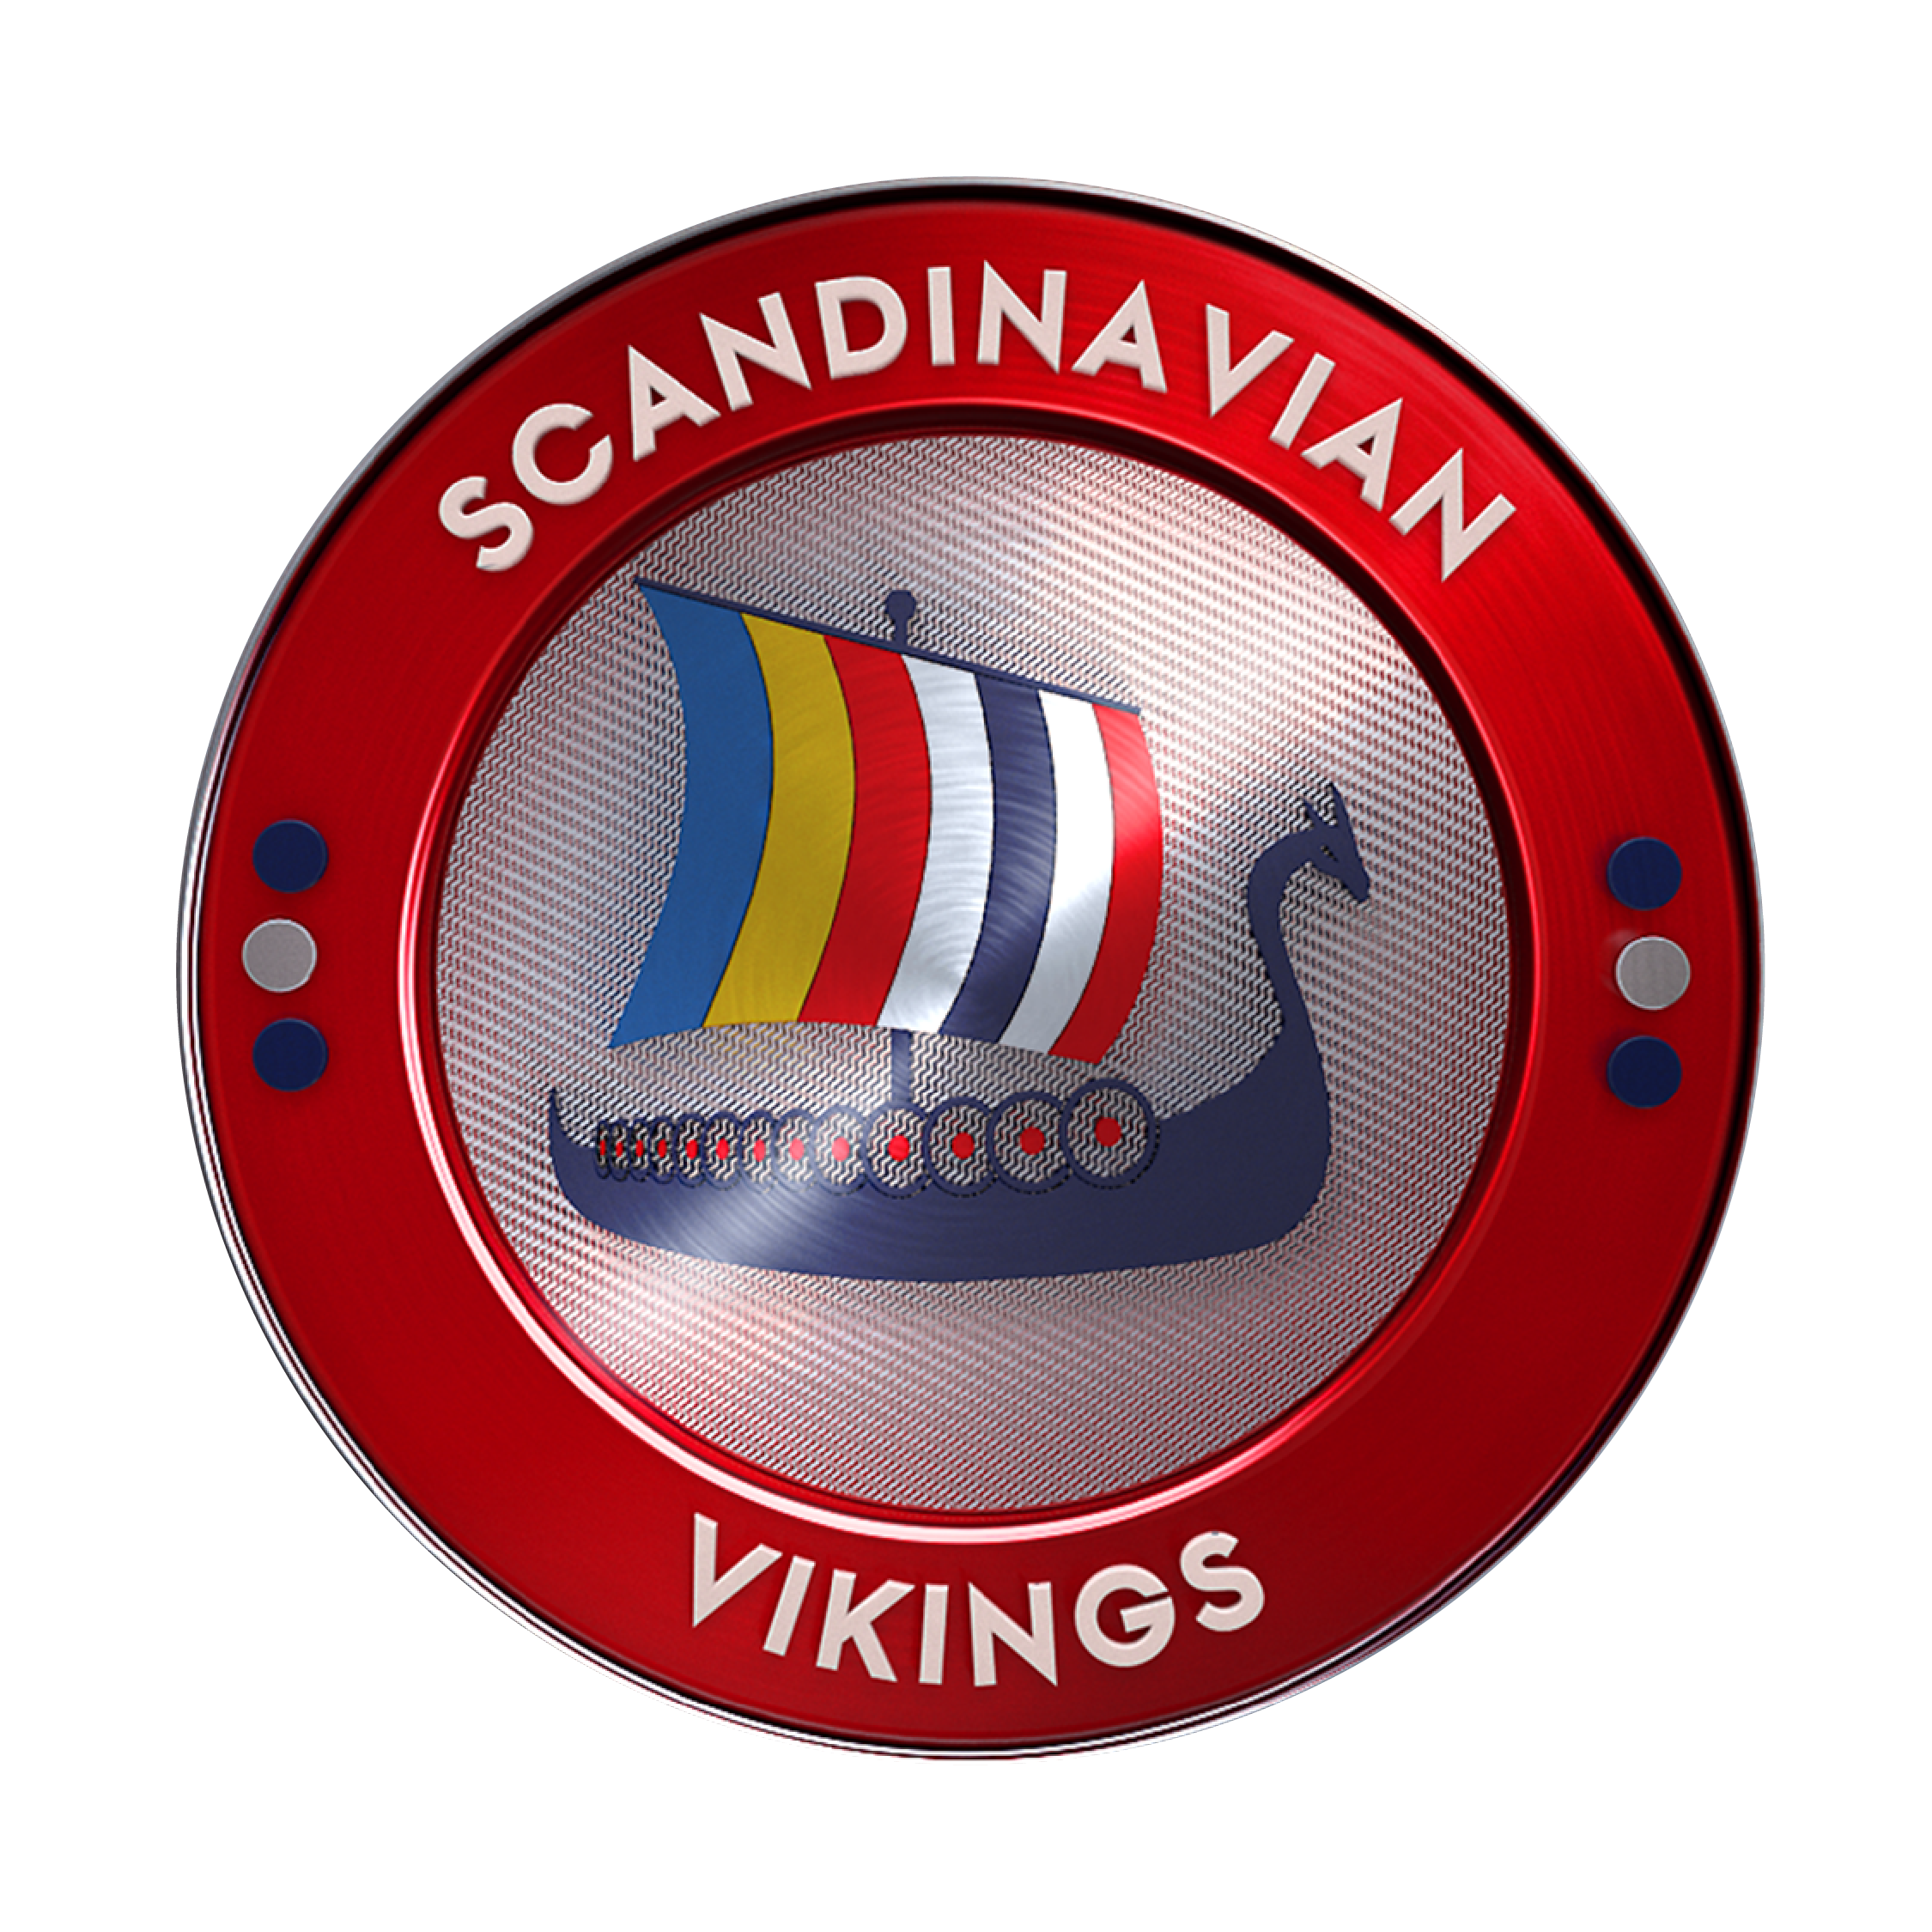 SCANDINAVIAN VIKINGS 24